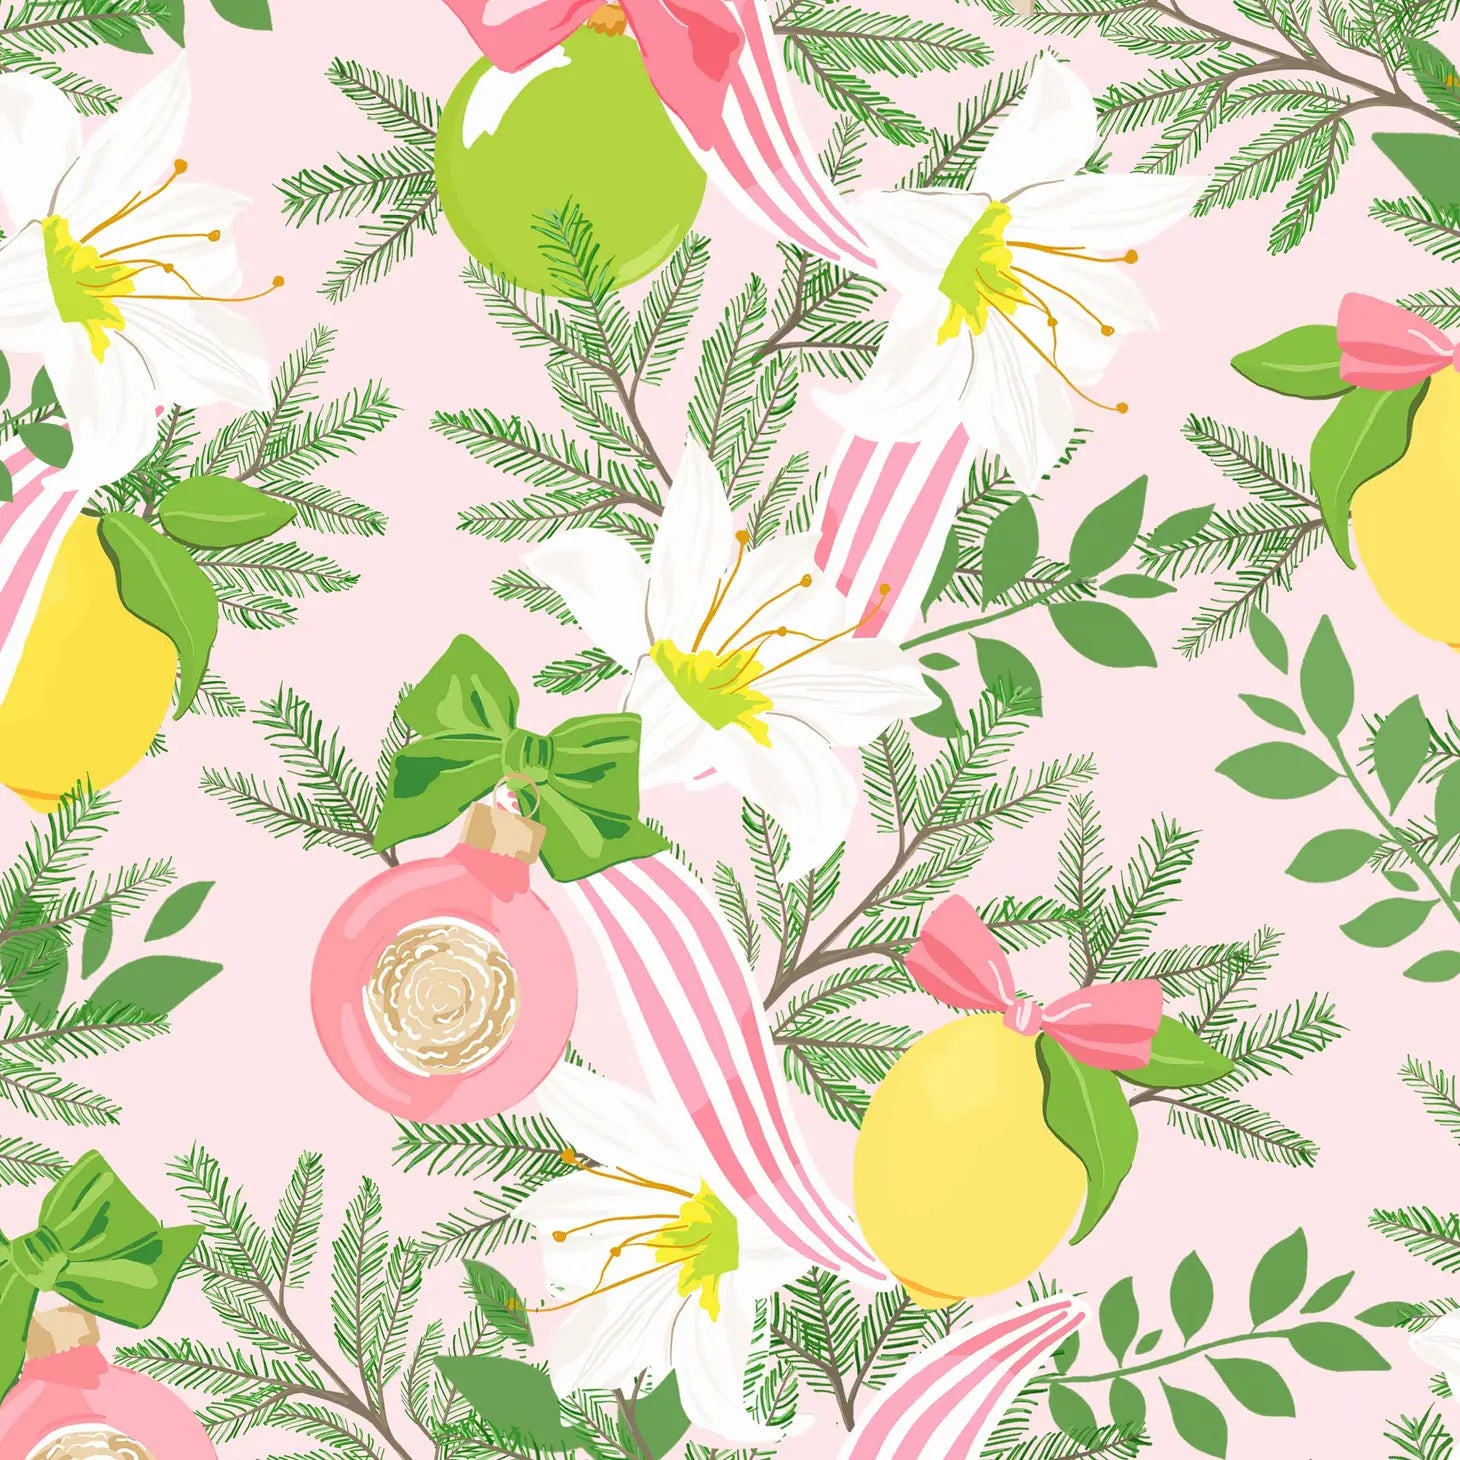 Ribbons & Lemons Holiday Paper Placemat Sheets, Pink